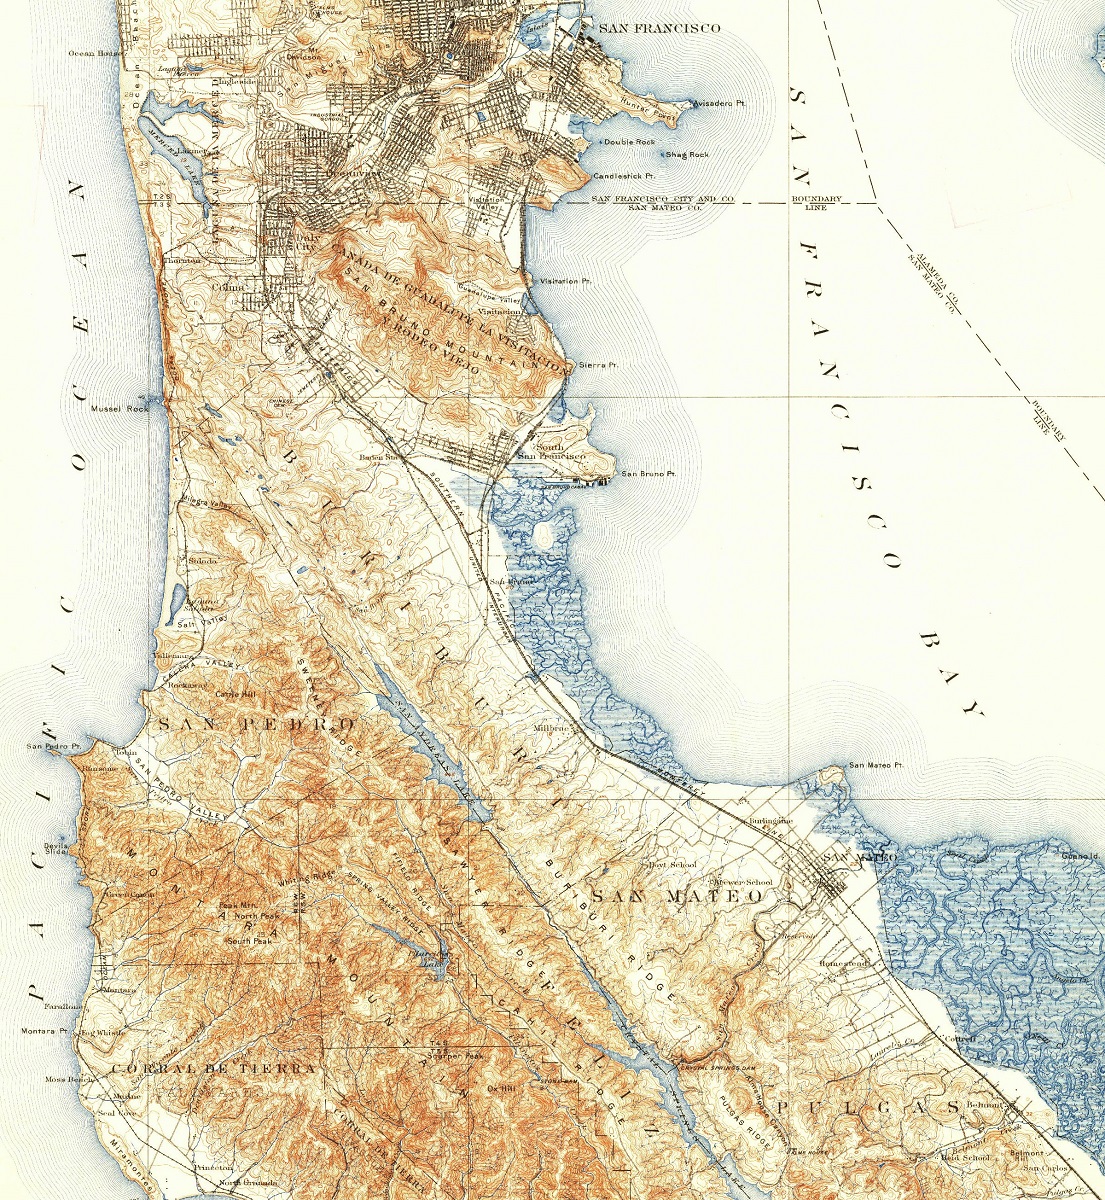 USGS Historical Maps - San Mateo, California 1915